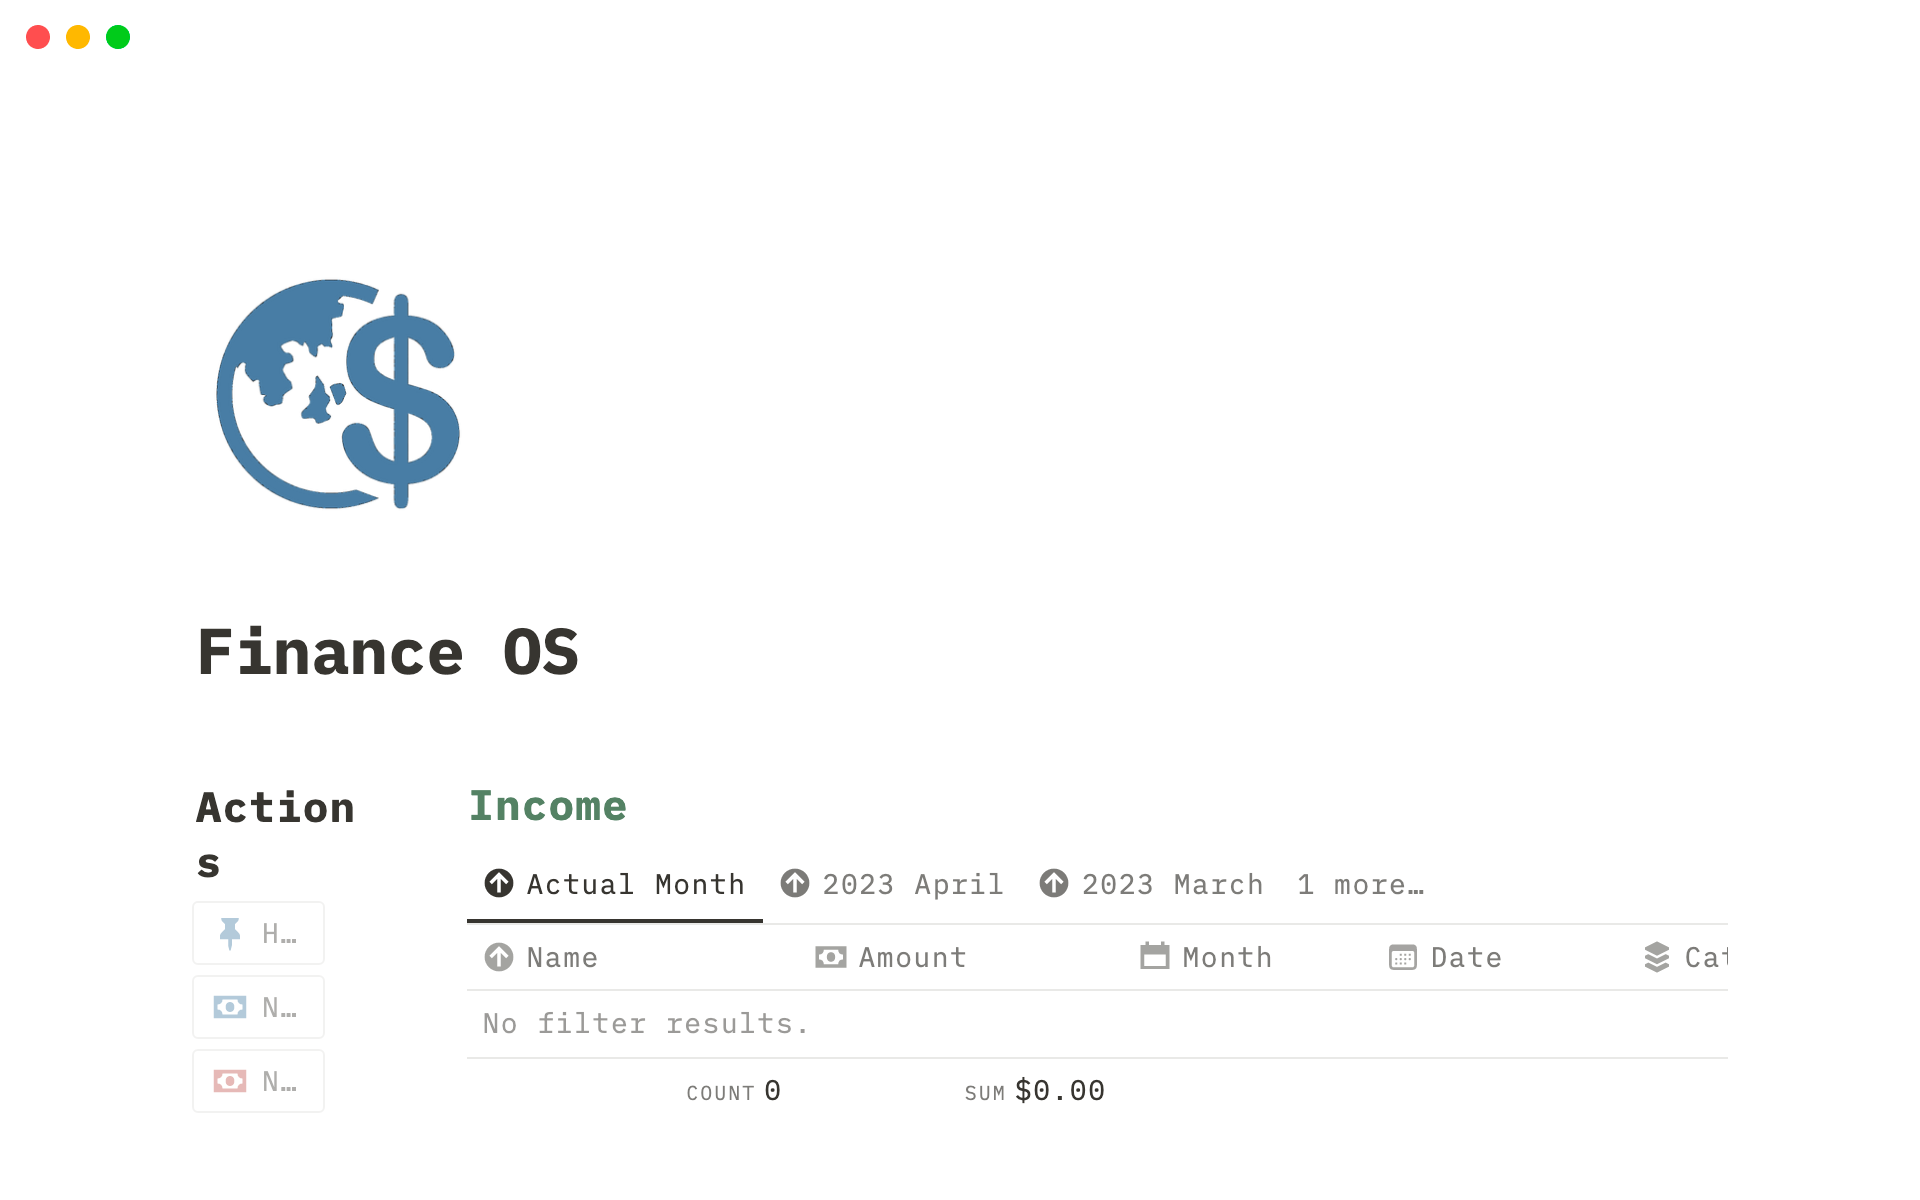 Aperçu du modèle de Finance OS